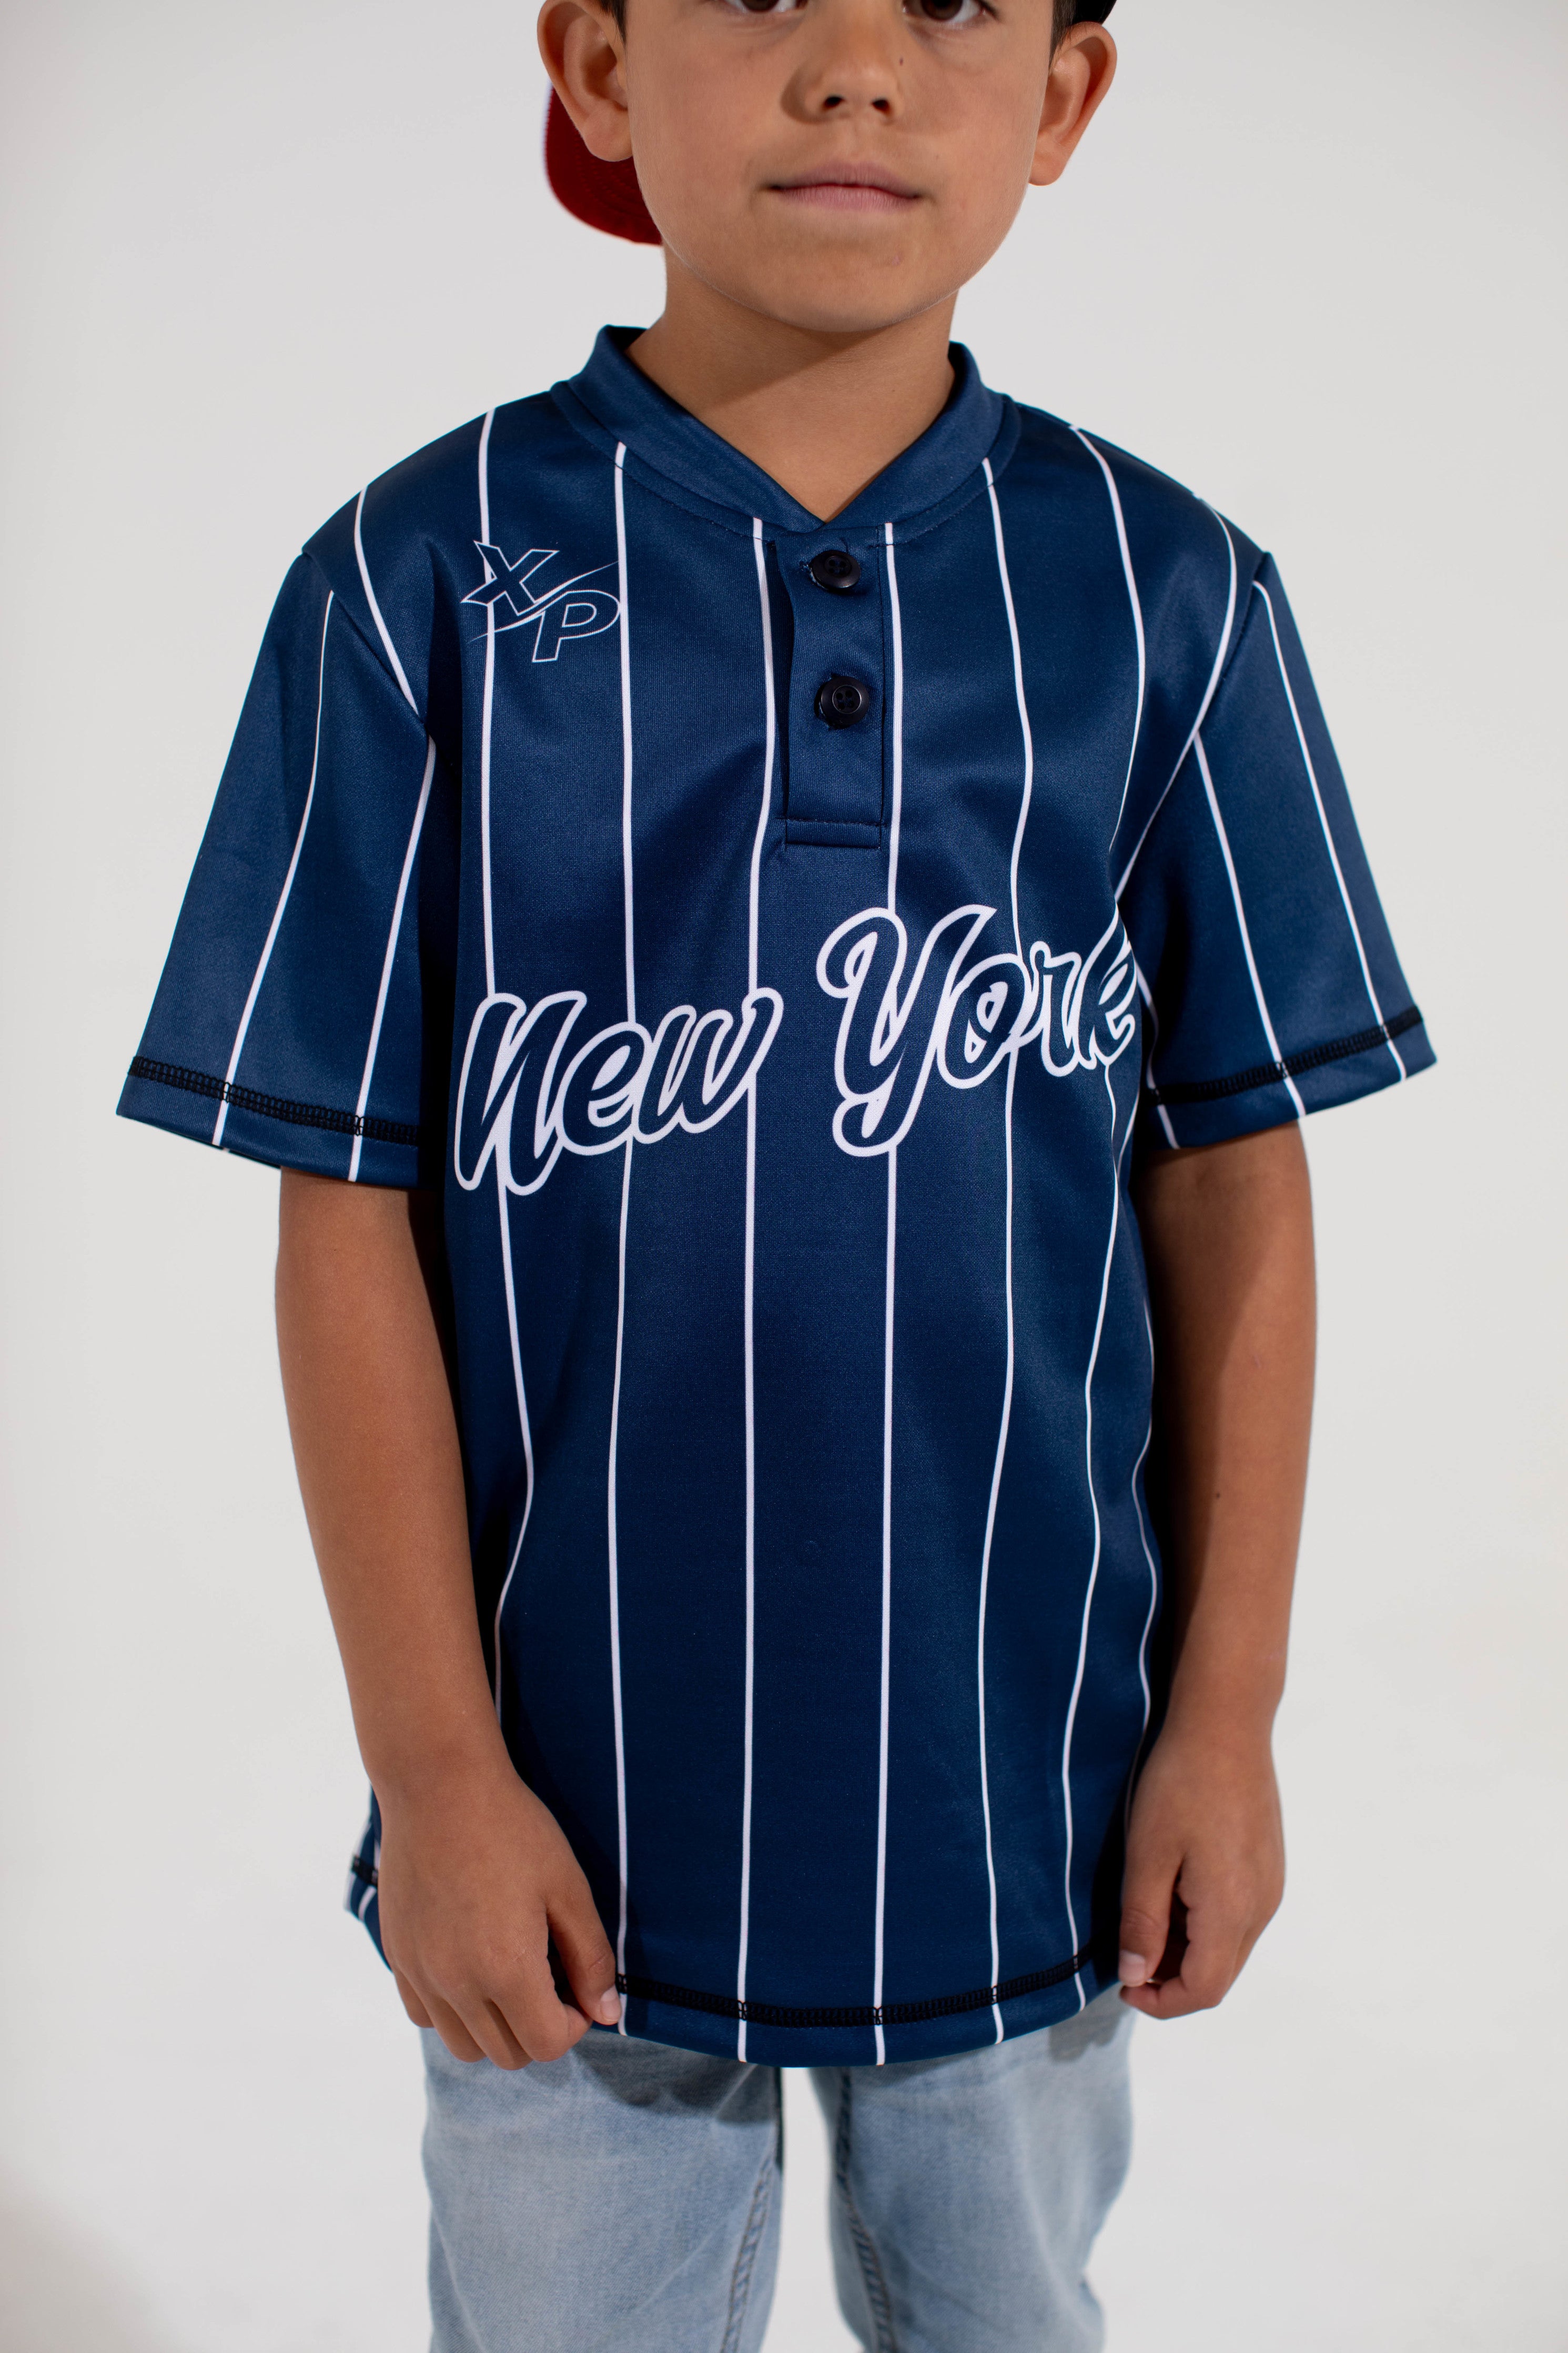 New York Two button Baseball Jersey